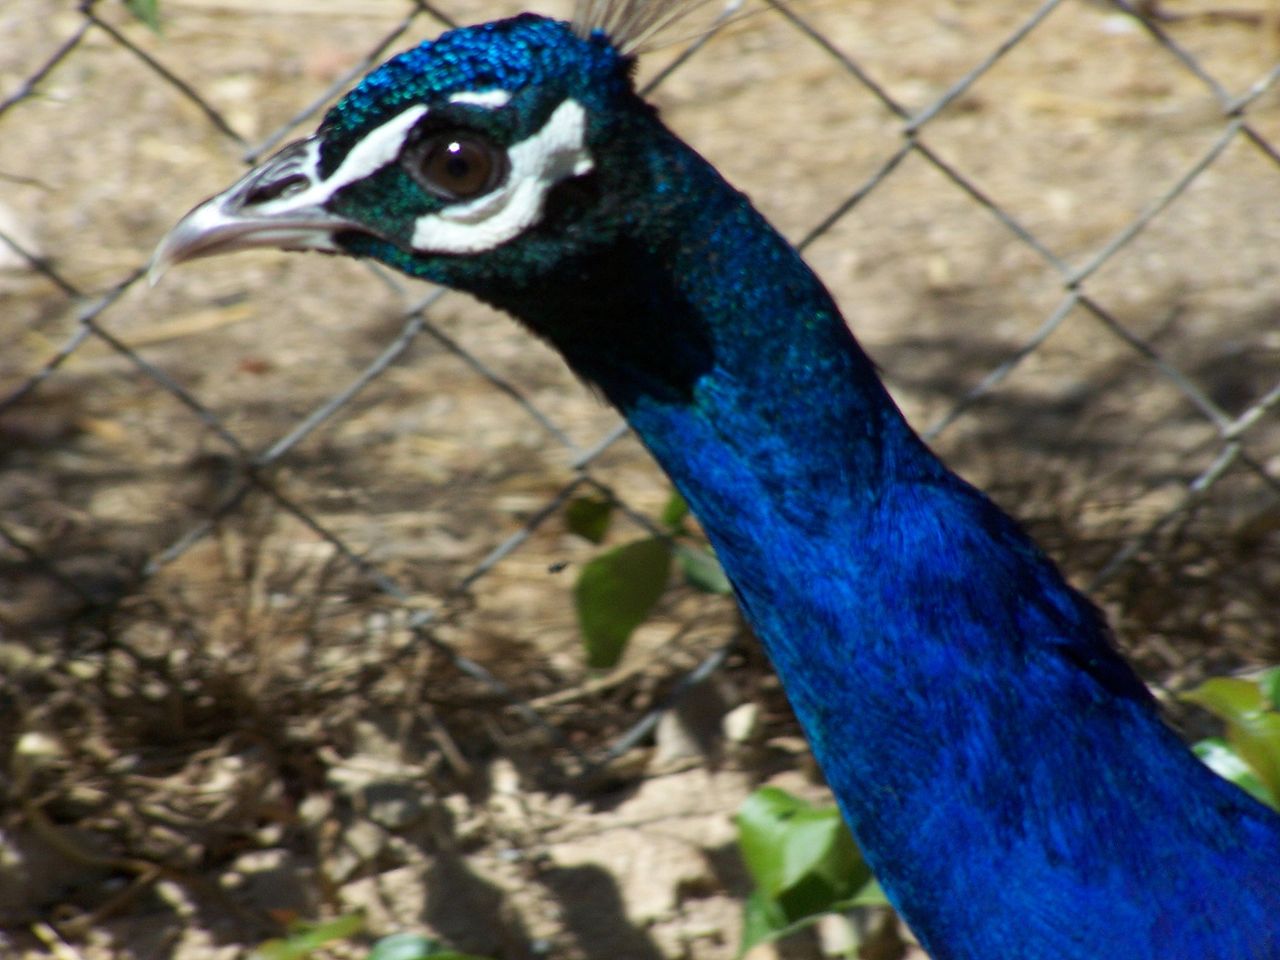 File:Ghi, pettingzoo (torso of escaped peacock - not school pecock